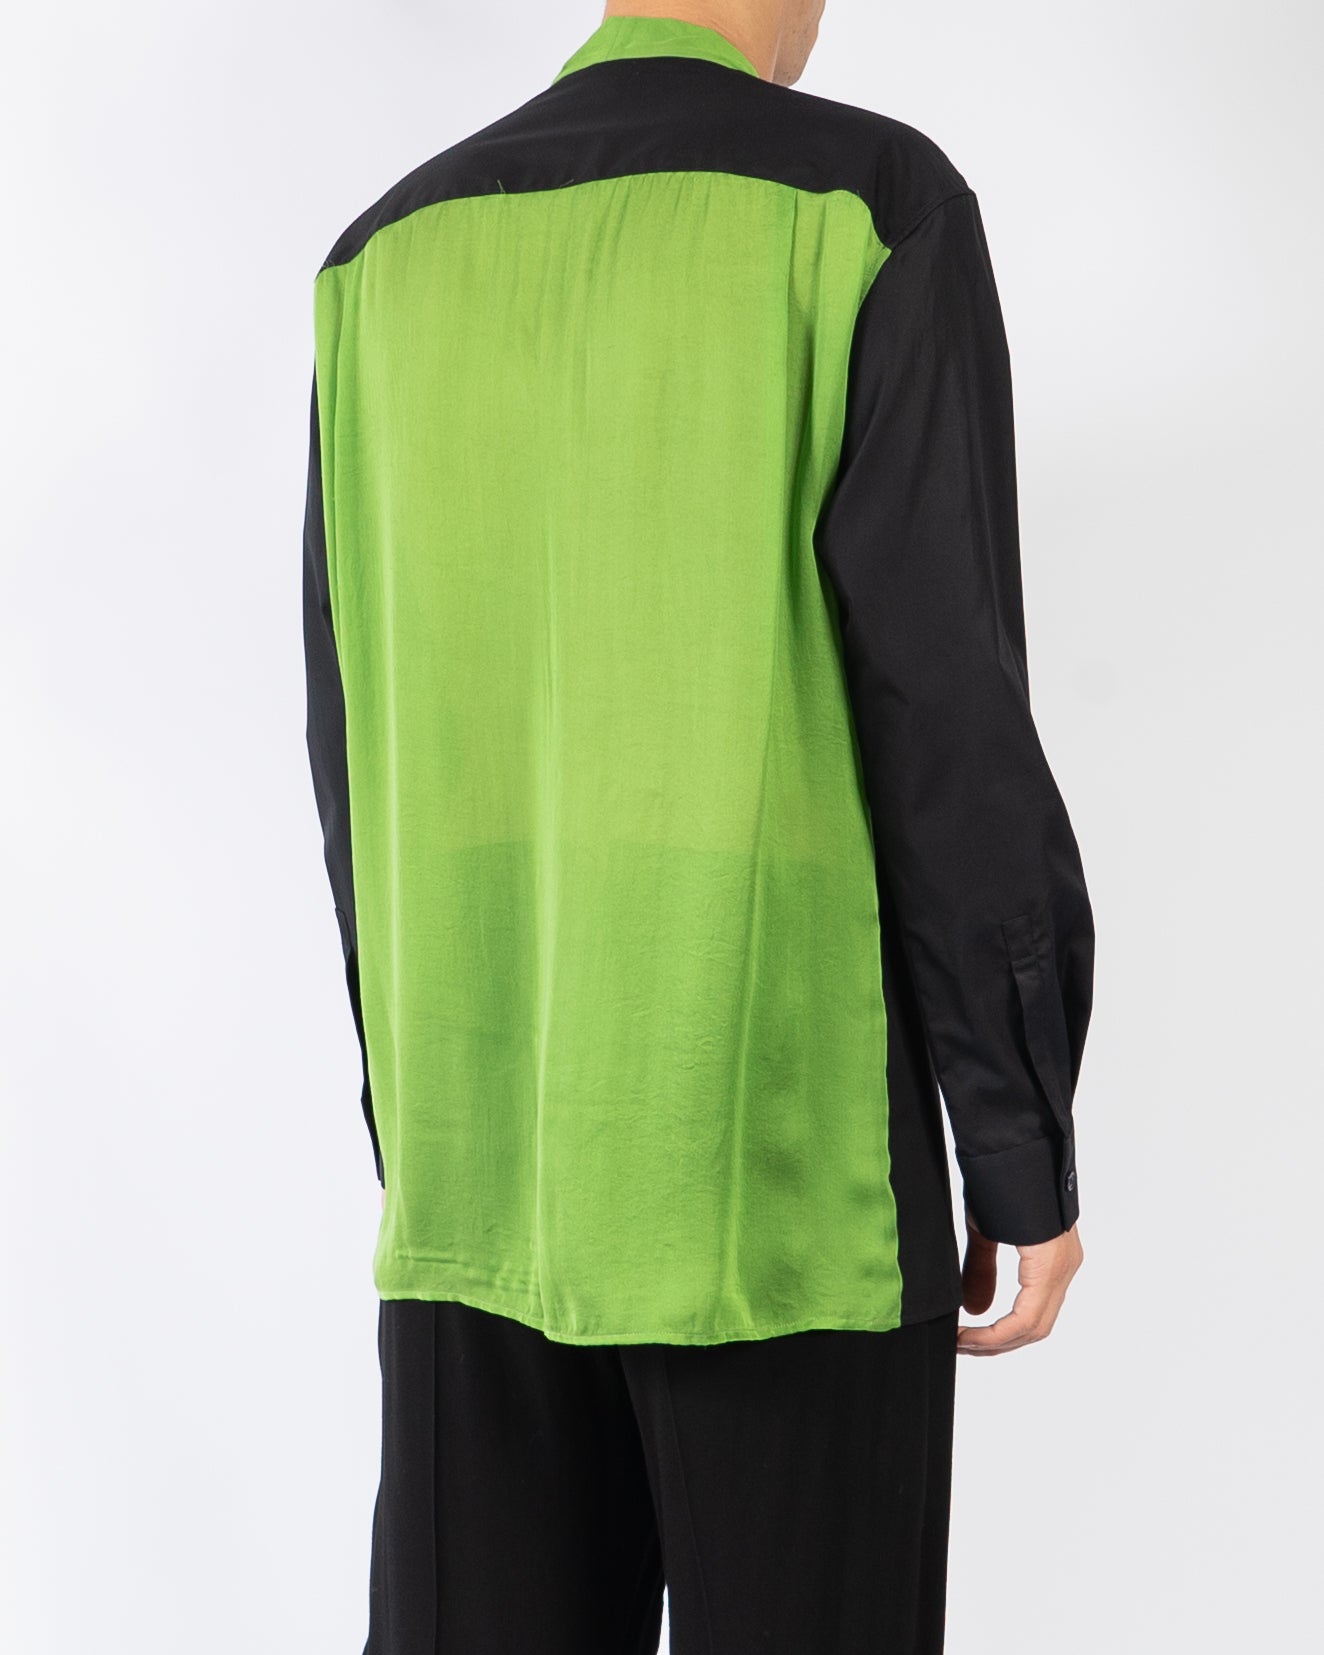 SS19 Black & Green Plastron Shirt Sample